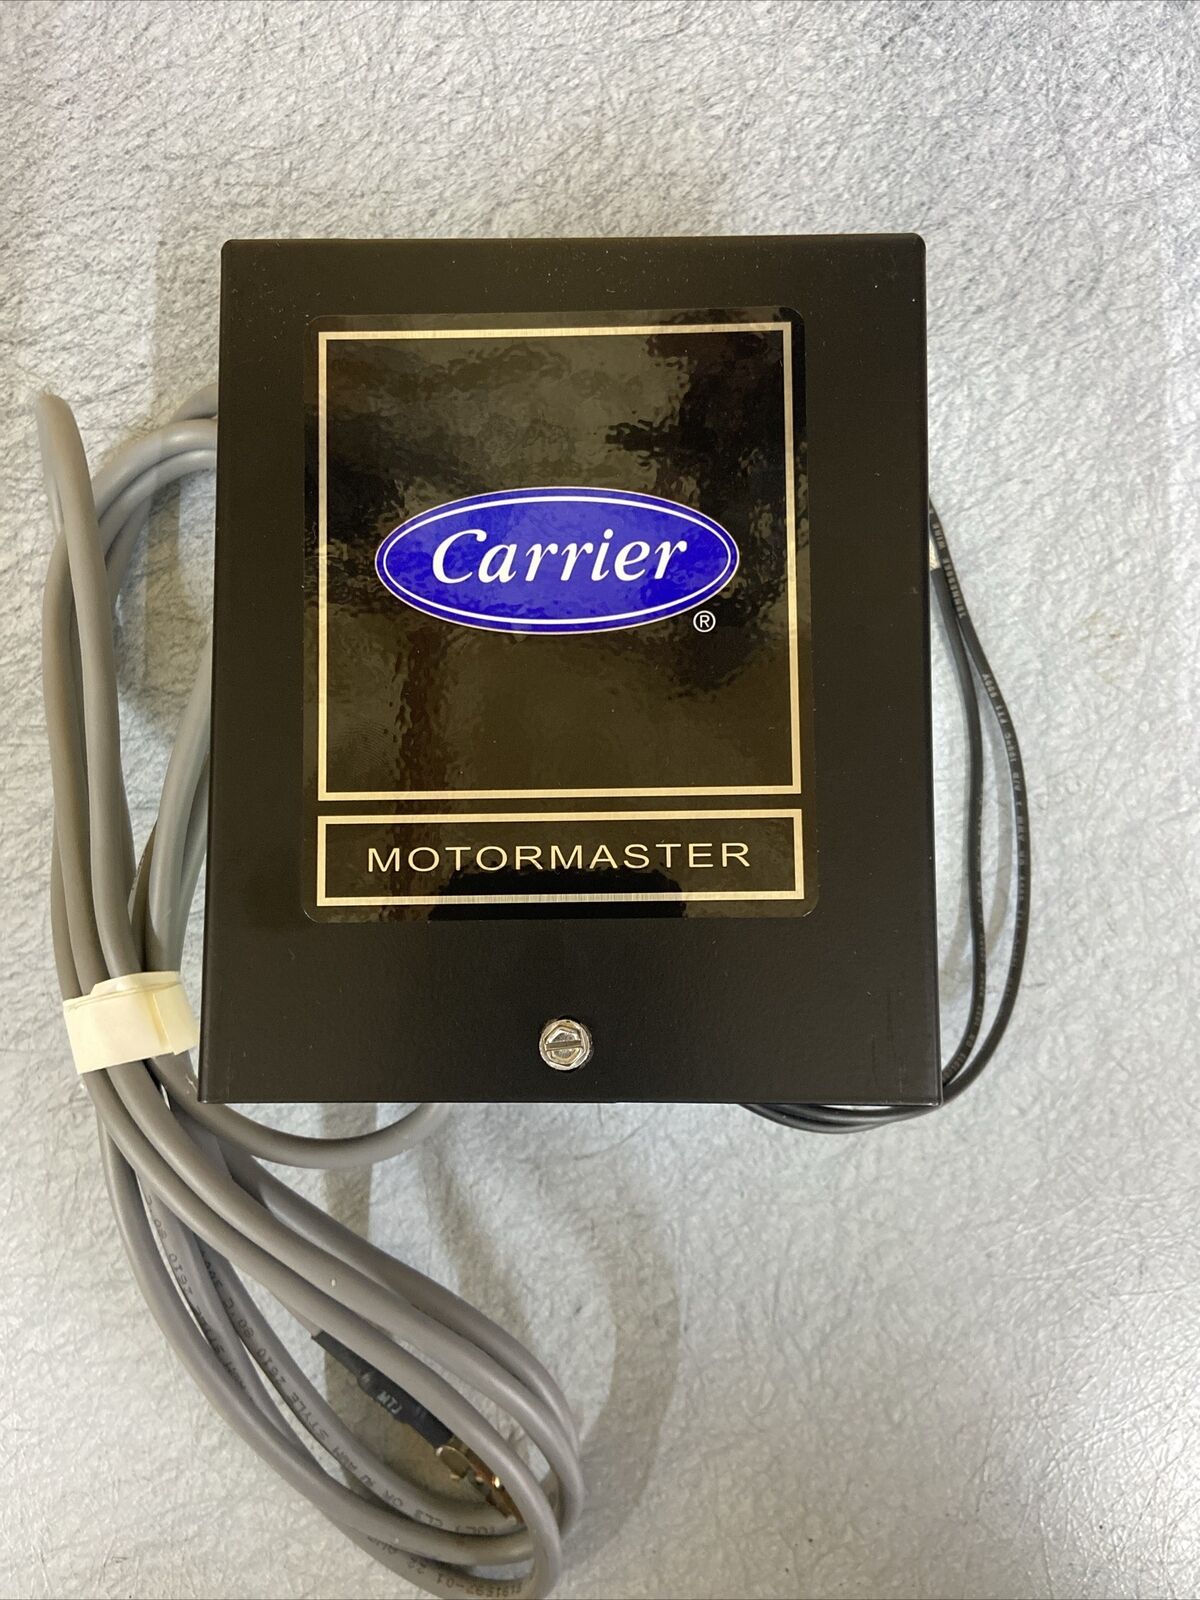 Carrier Motor master 32LT 660 004- P\\N: 990-151-1A-U, BRAND NEW